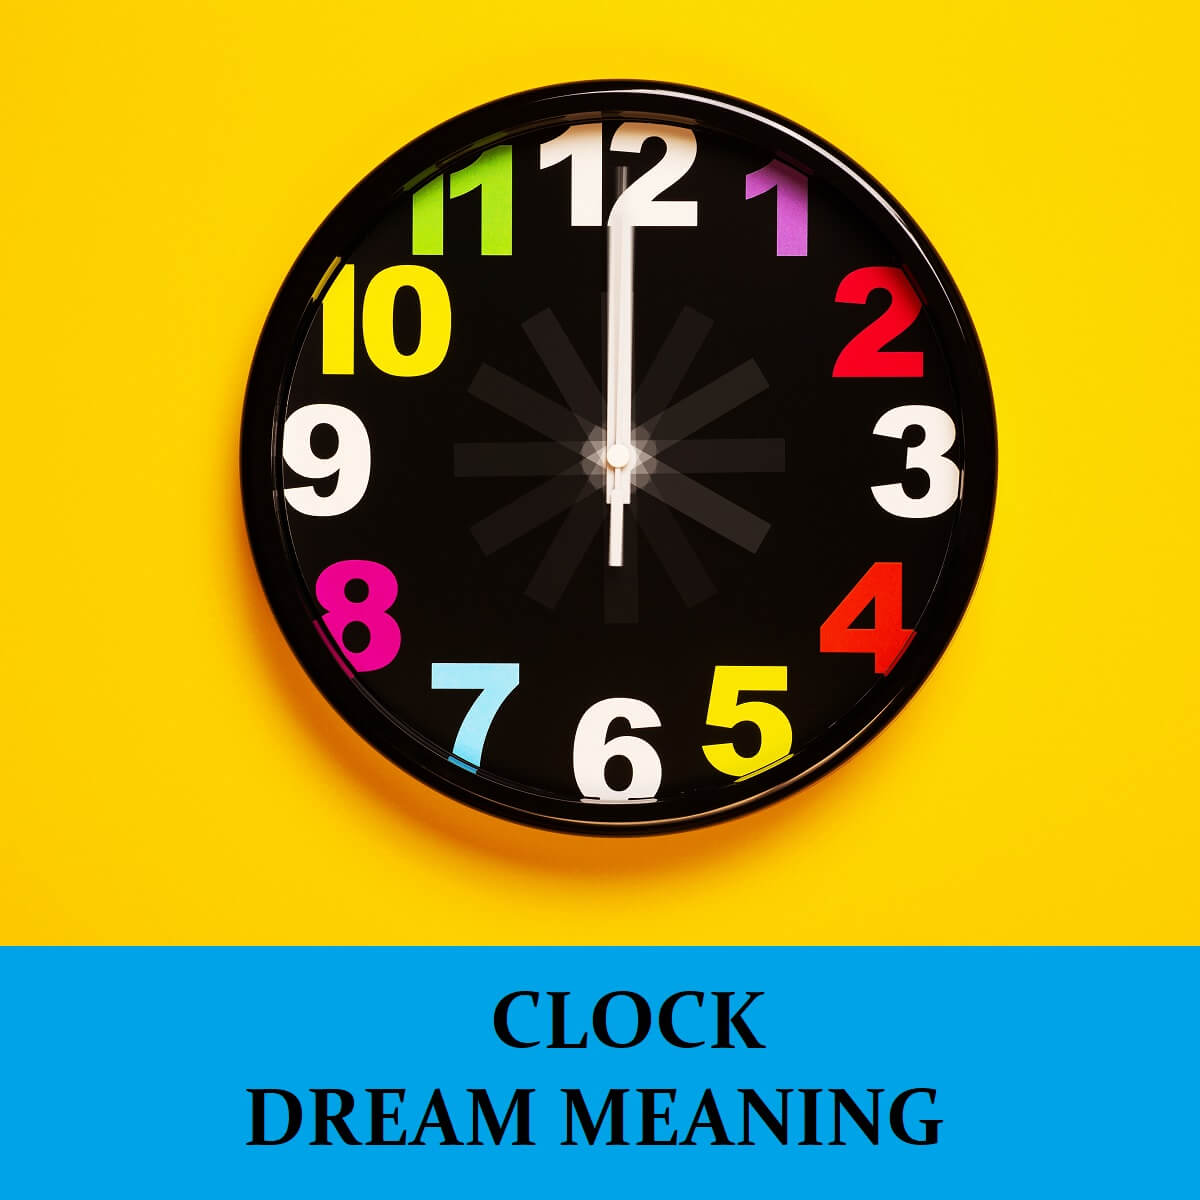 Dream About Clocks